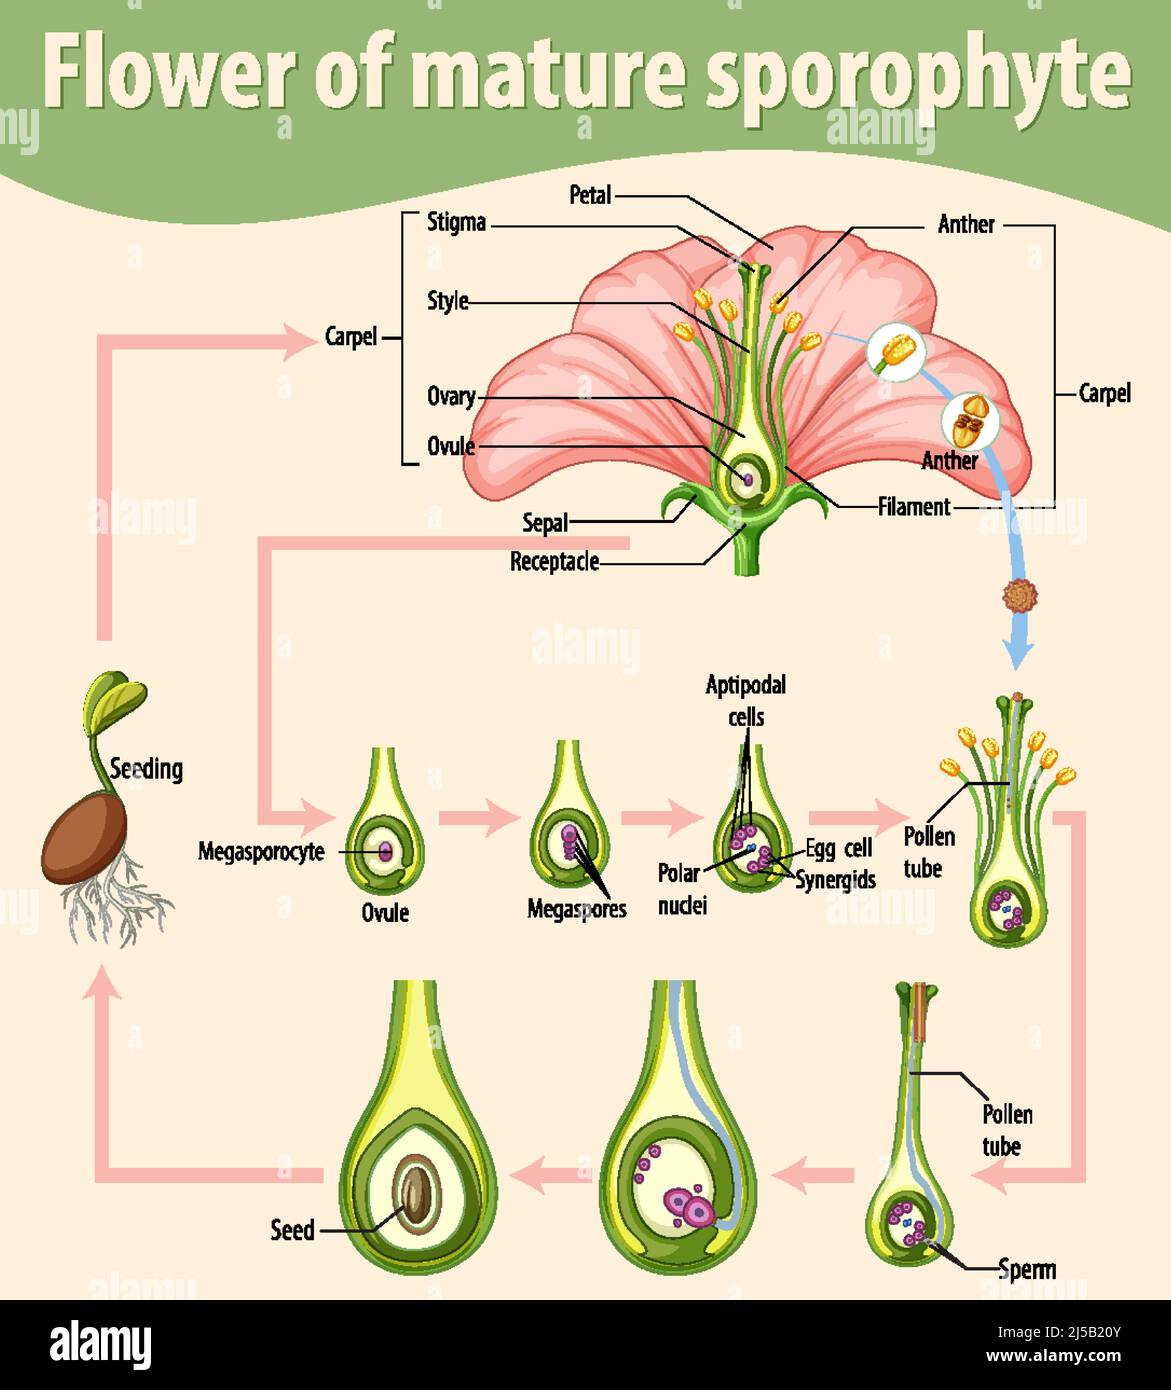 Diagram showing flower of mature sporophyte illustration Stock Vector